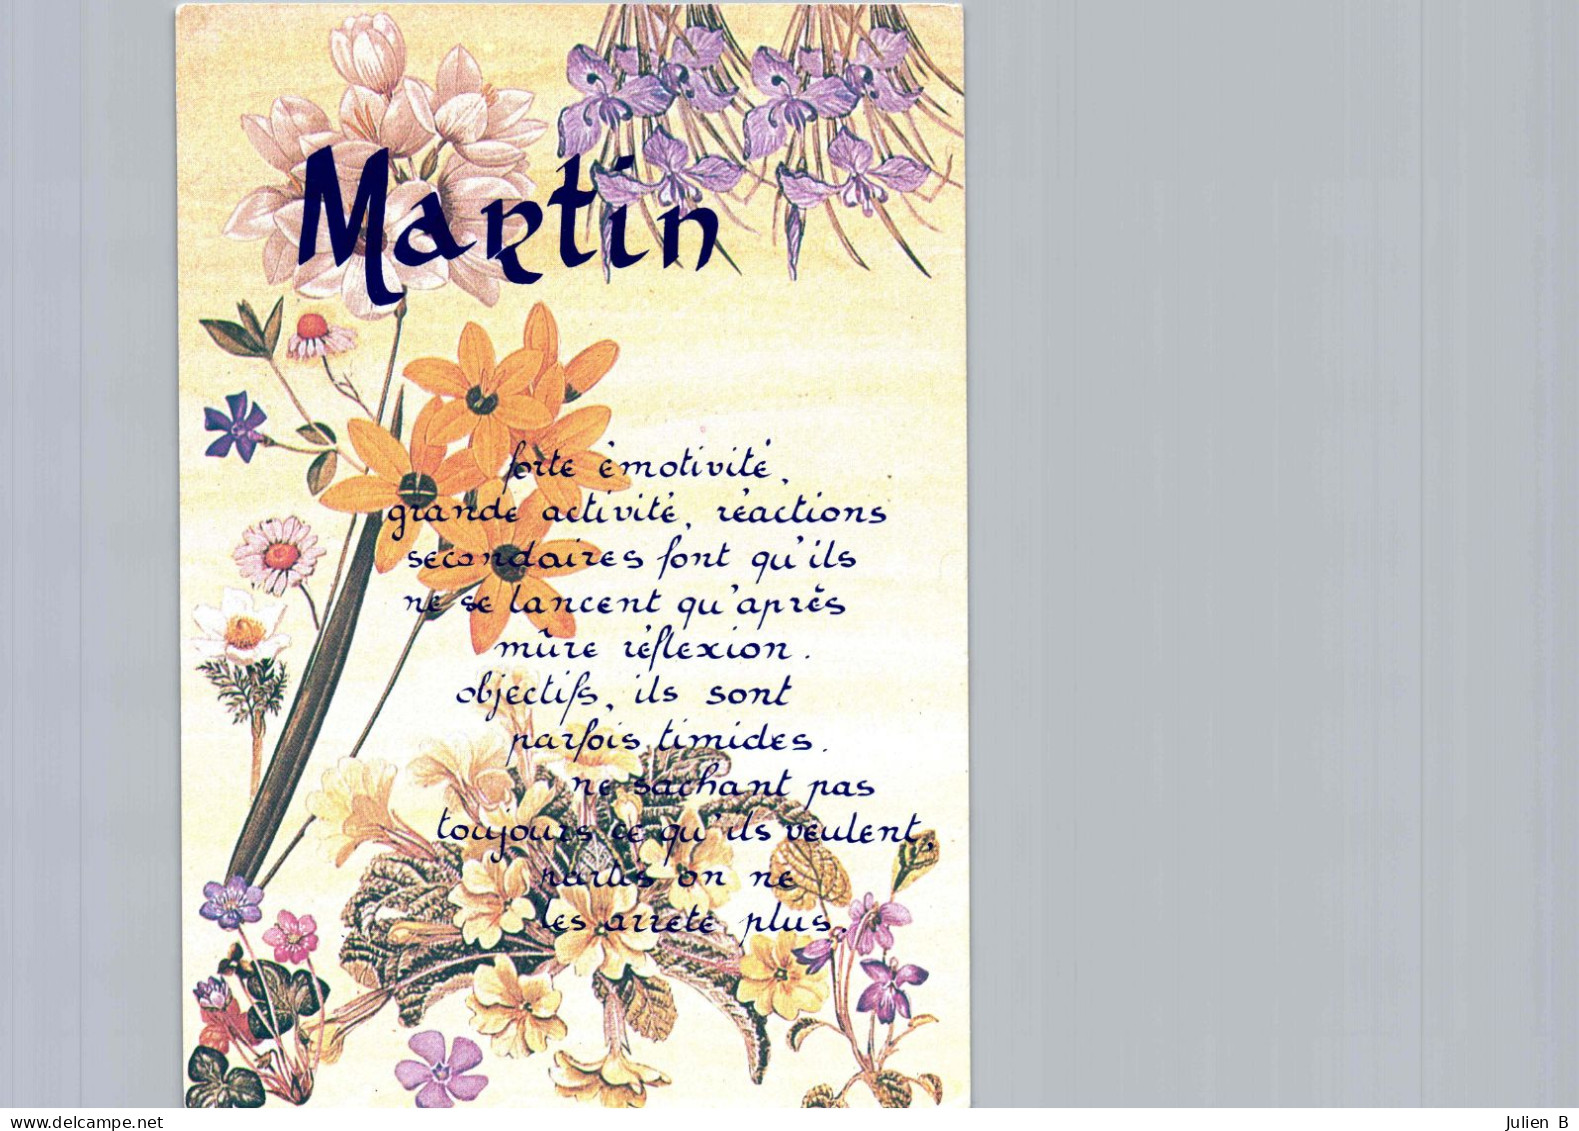 Martin, Edition ICDF - Nomi